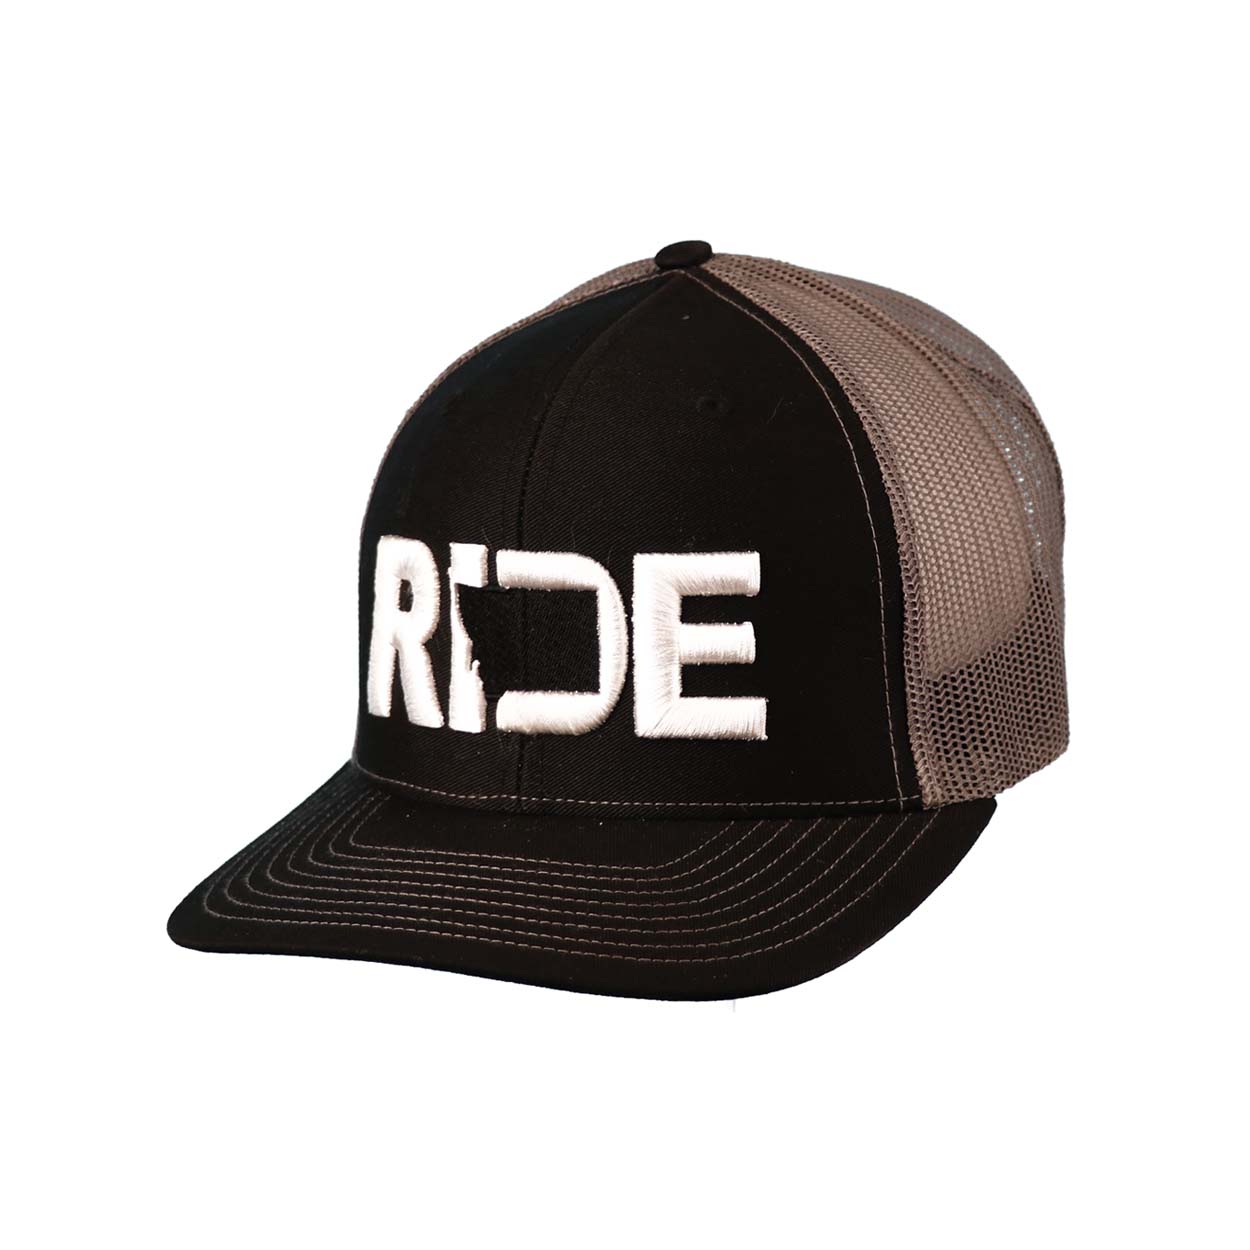 Ride Montana Classic Embroidered Snapback Trucker Hat Black/Gray